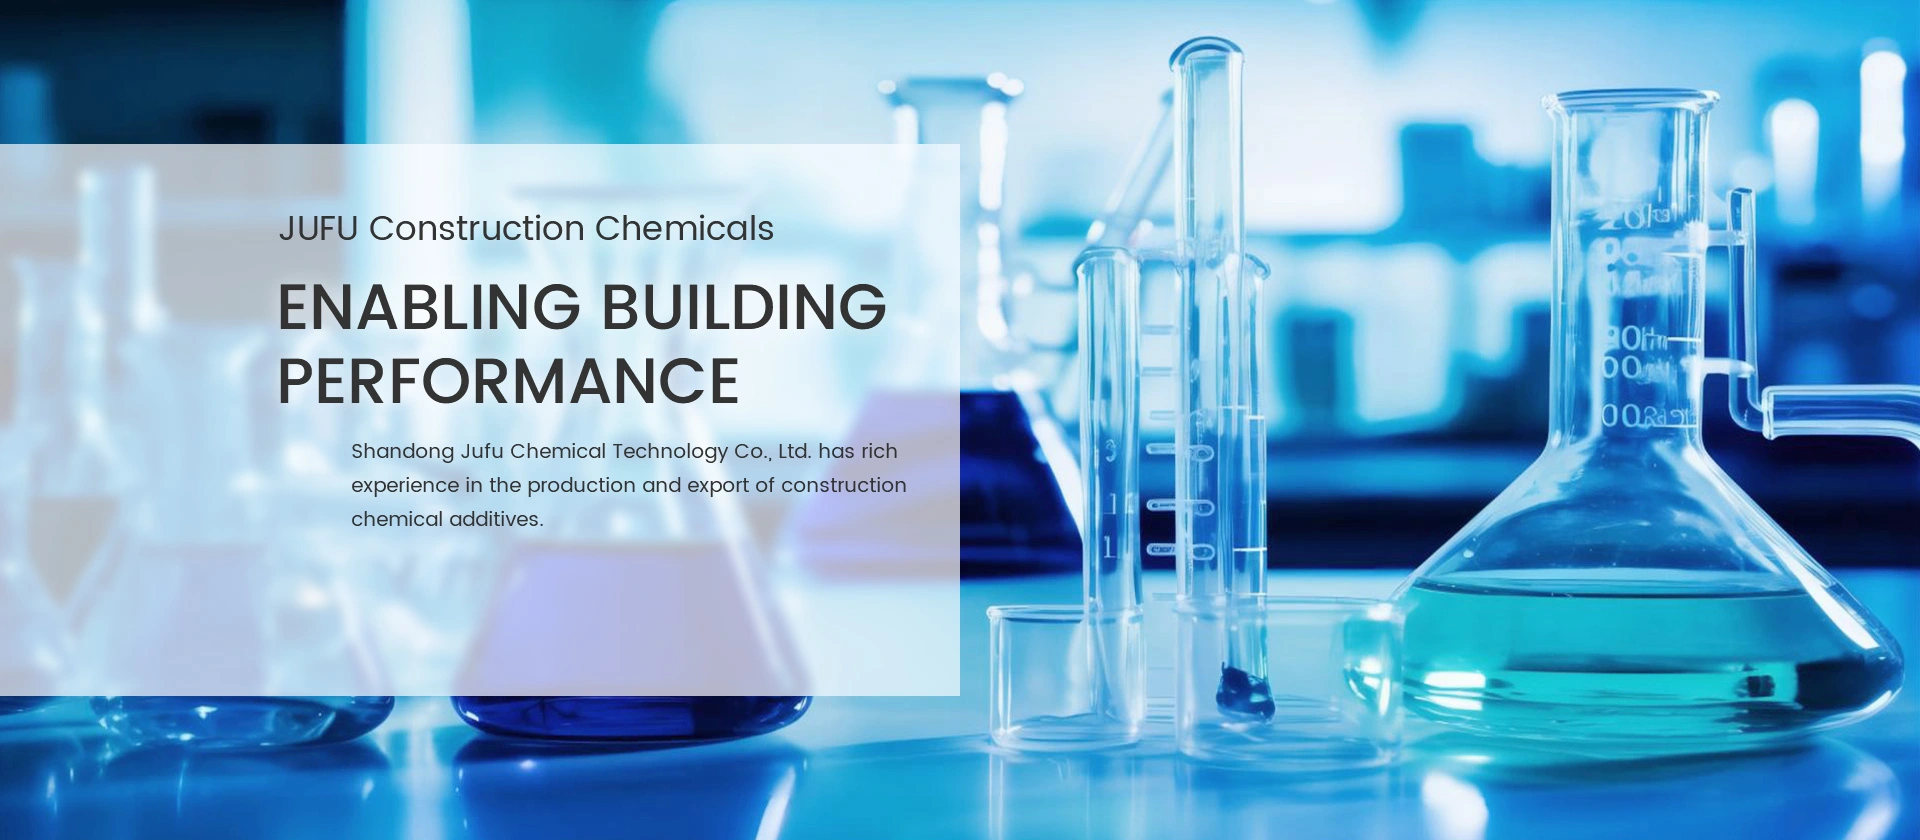 JUFU Construction Chemicals Enabling Building Performance